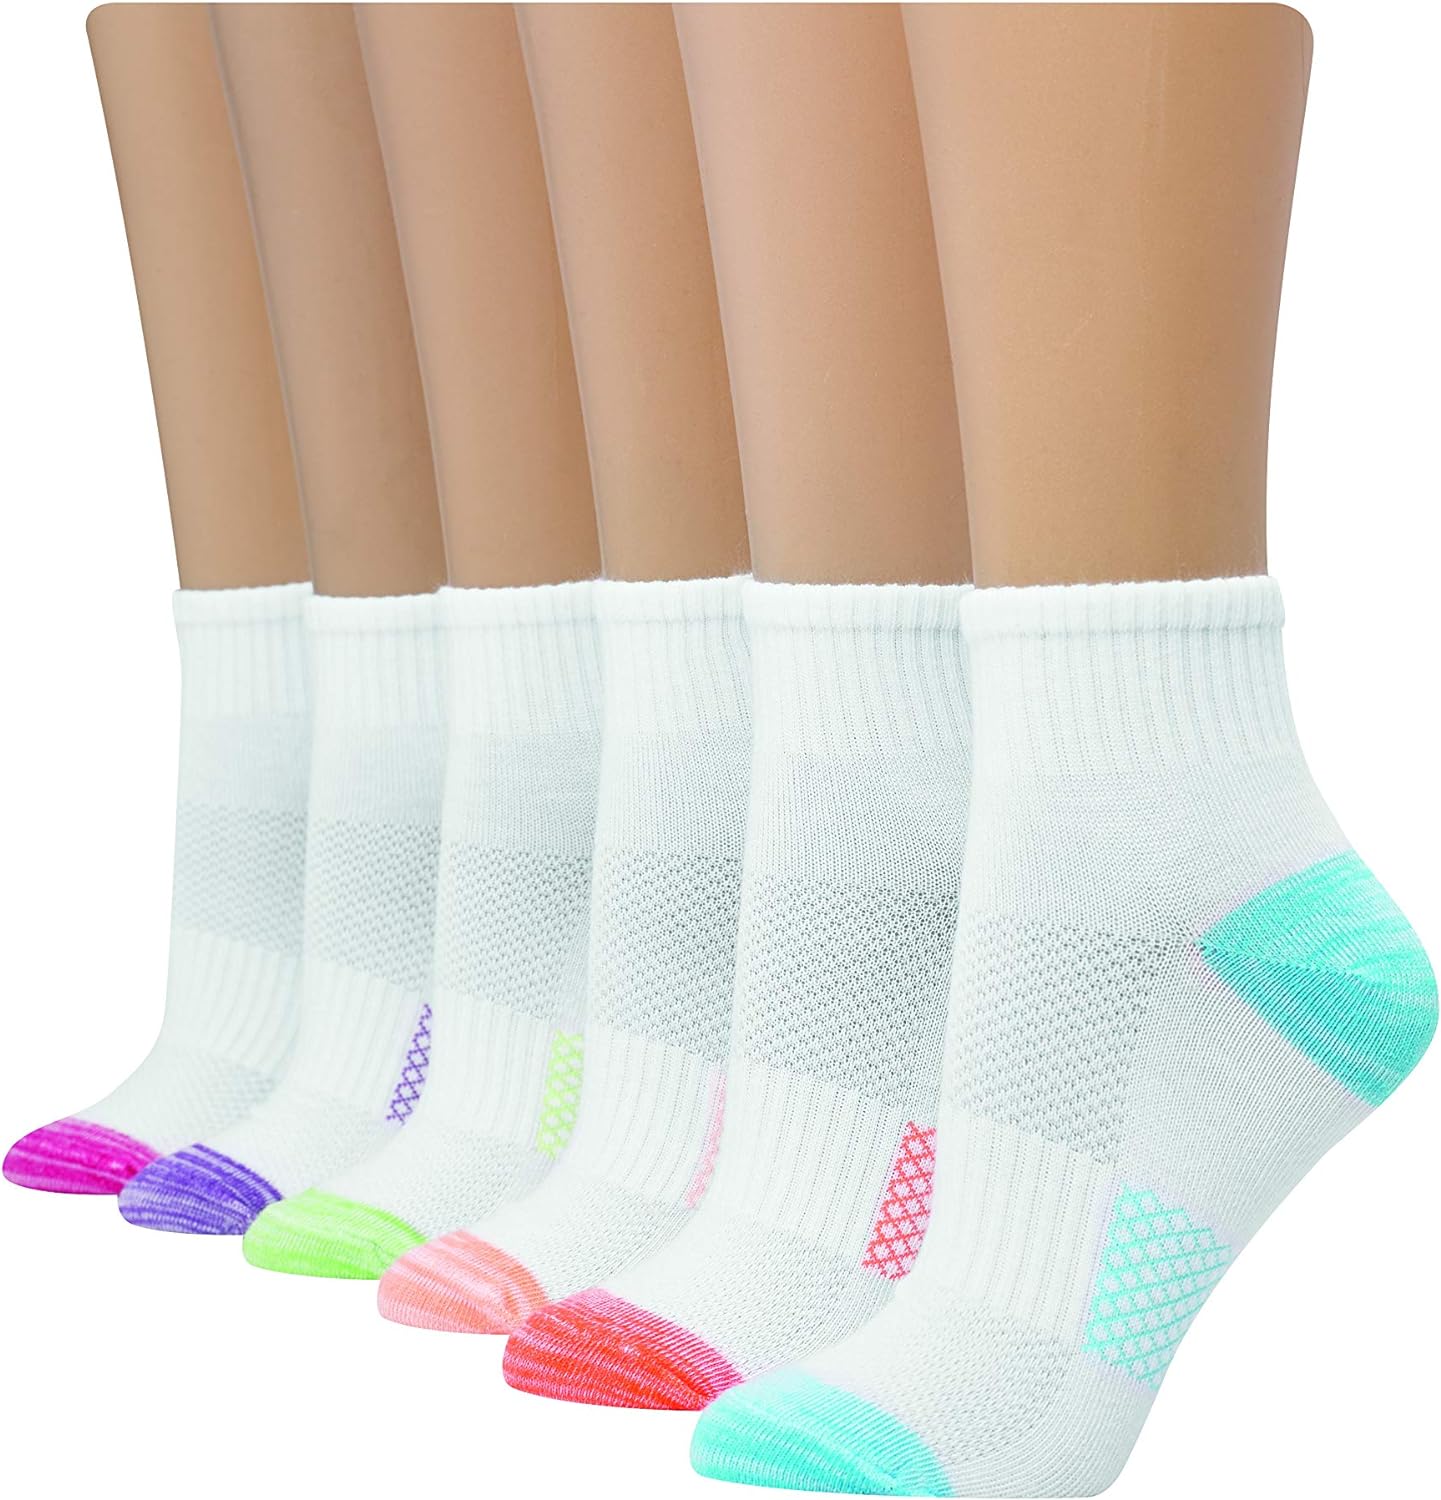 Hanes Women’s 6-Pair Lightweight Breathable Ventilation Ankle Socks